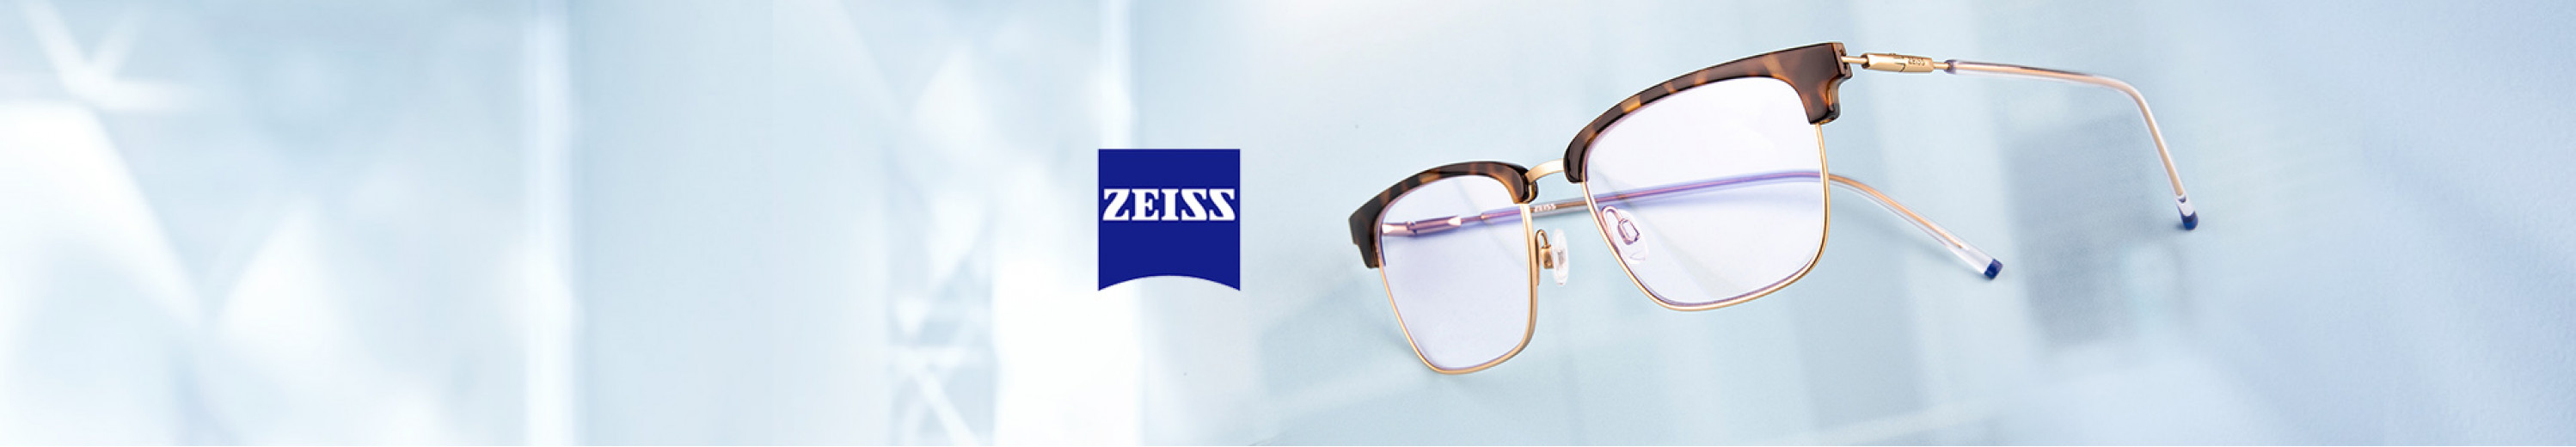 Zeiss Eyeglasses